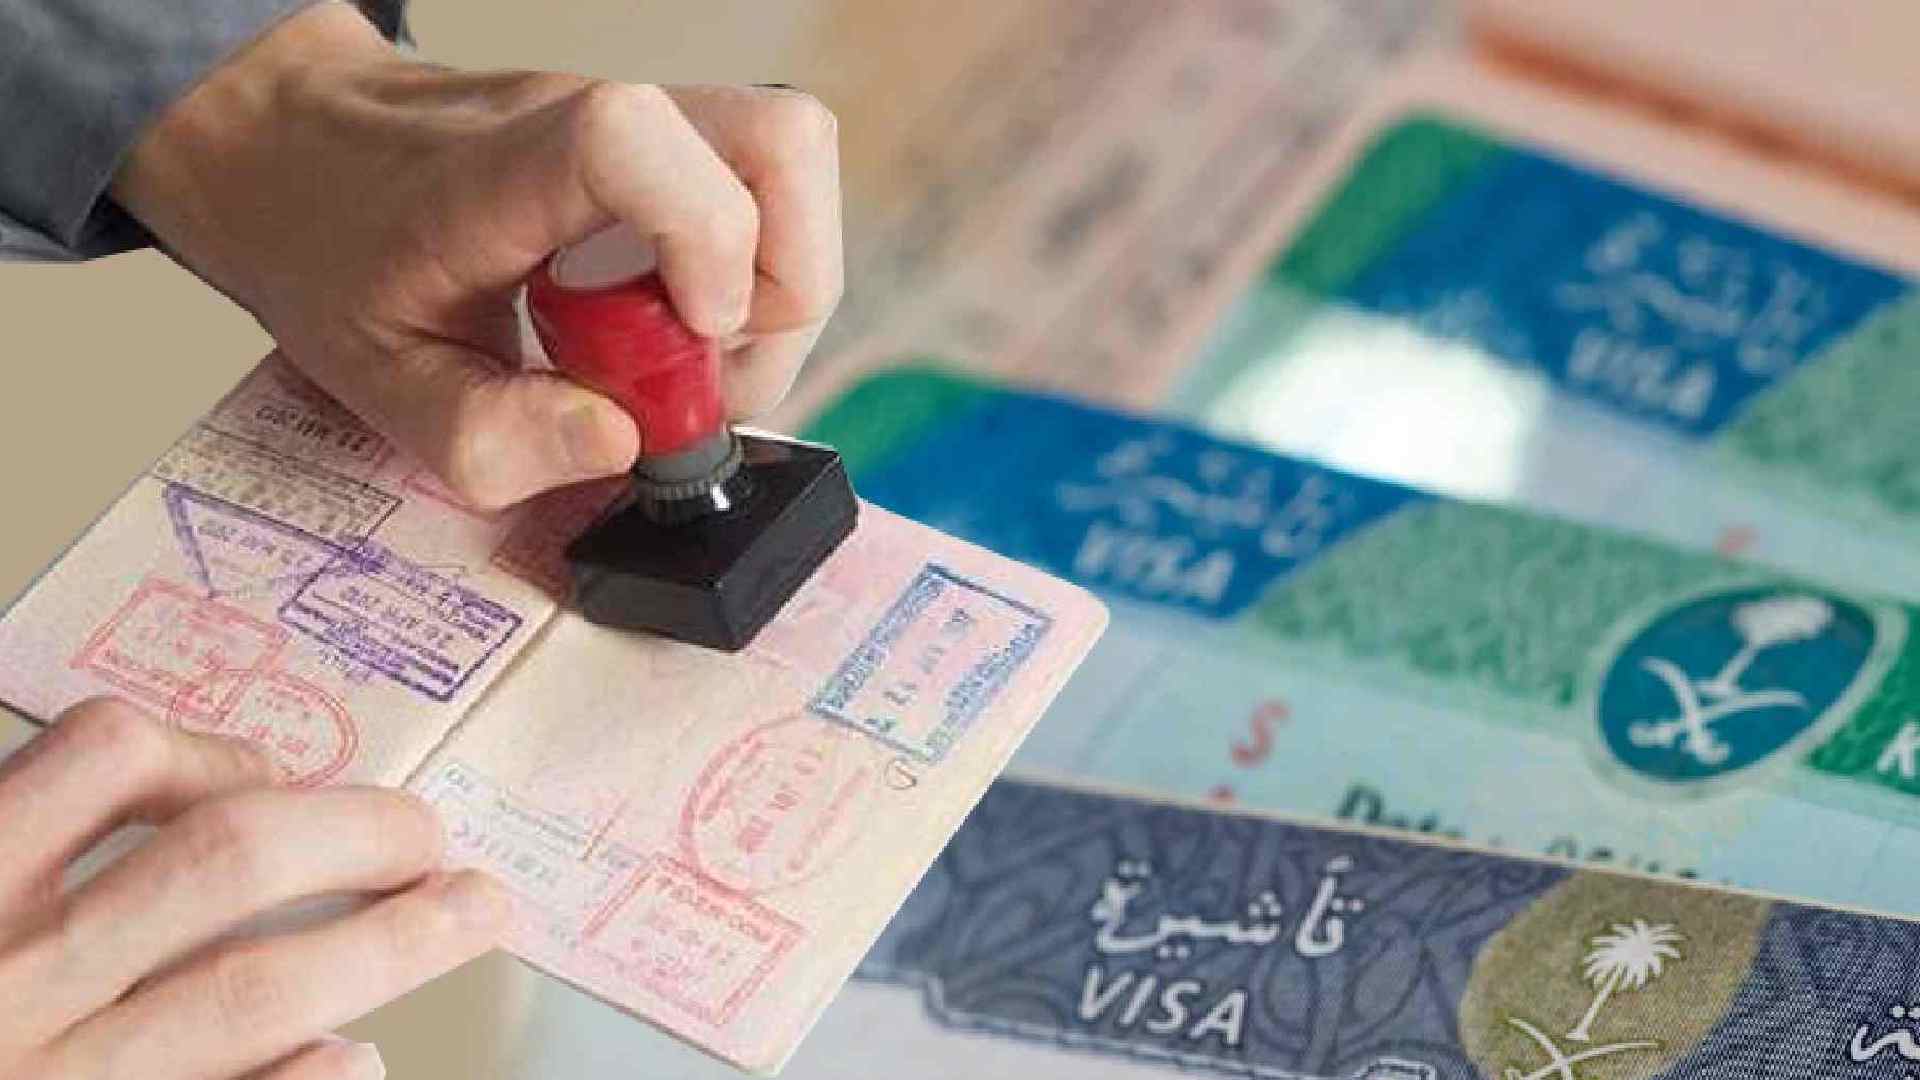 Saudi visit visa validity check